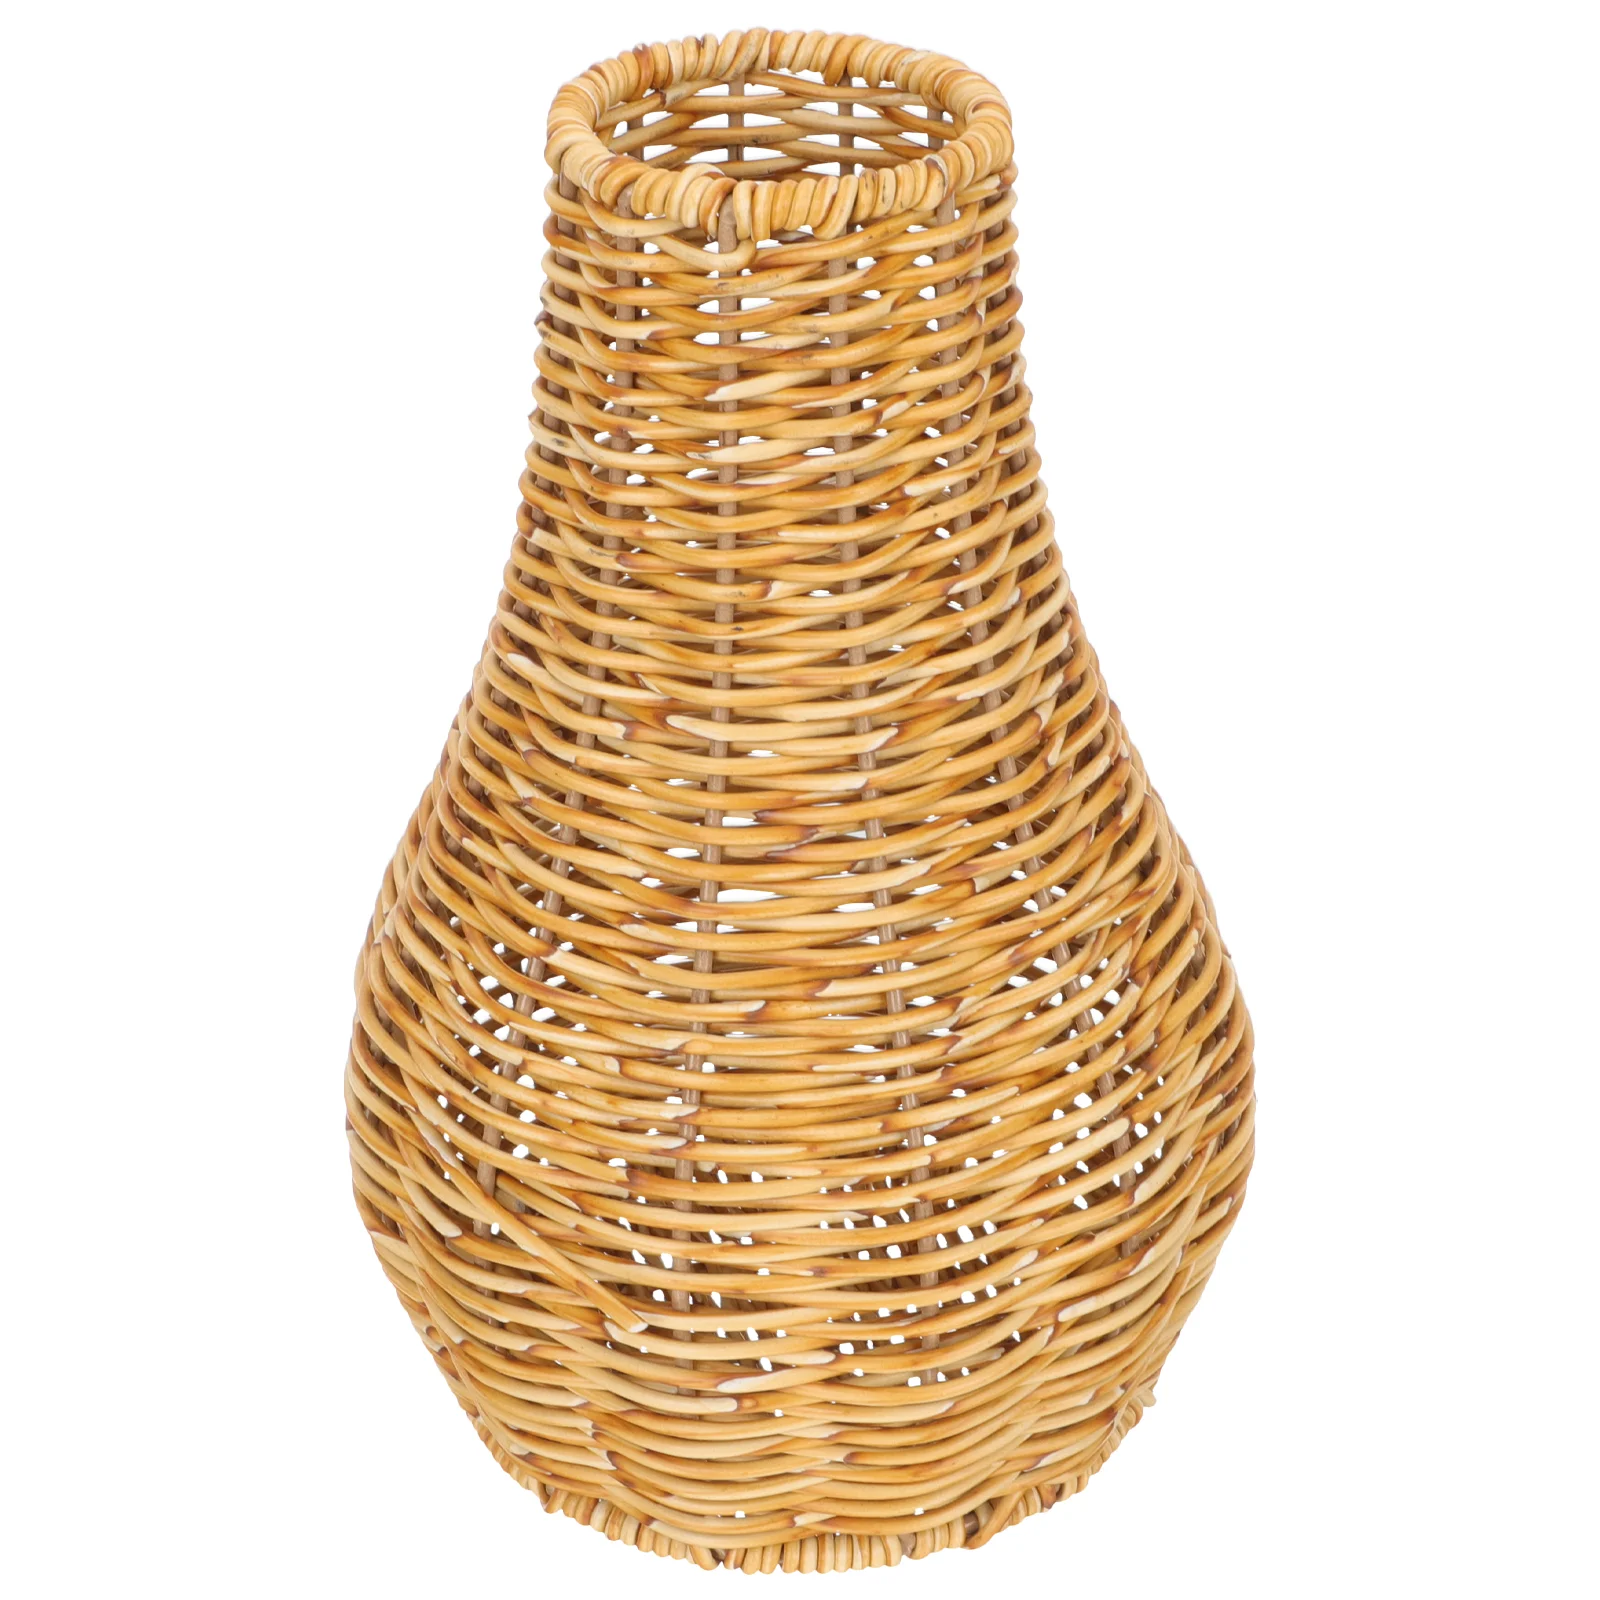 

Rattan Woven Flower Vase Farmhouse Country Plant Basket Decorative Wicker Dried Flower Vase